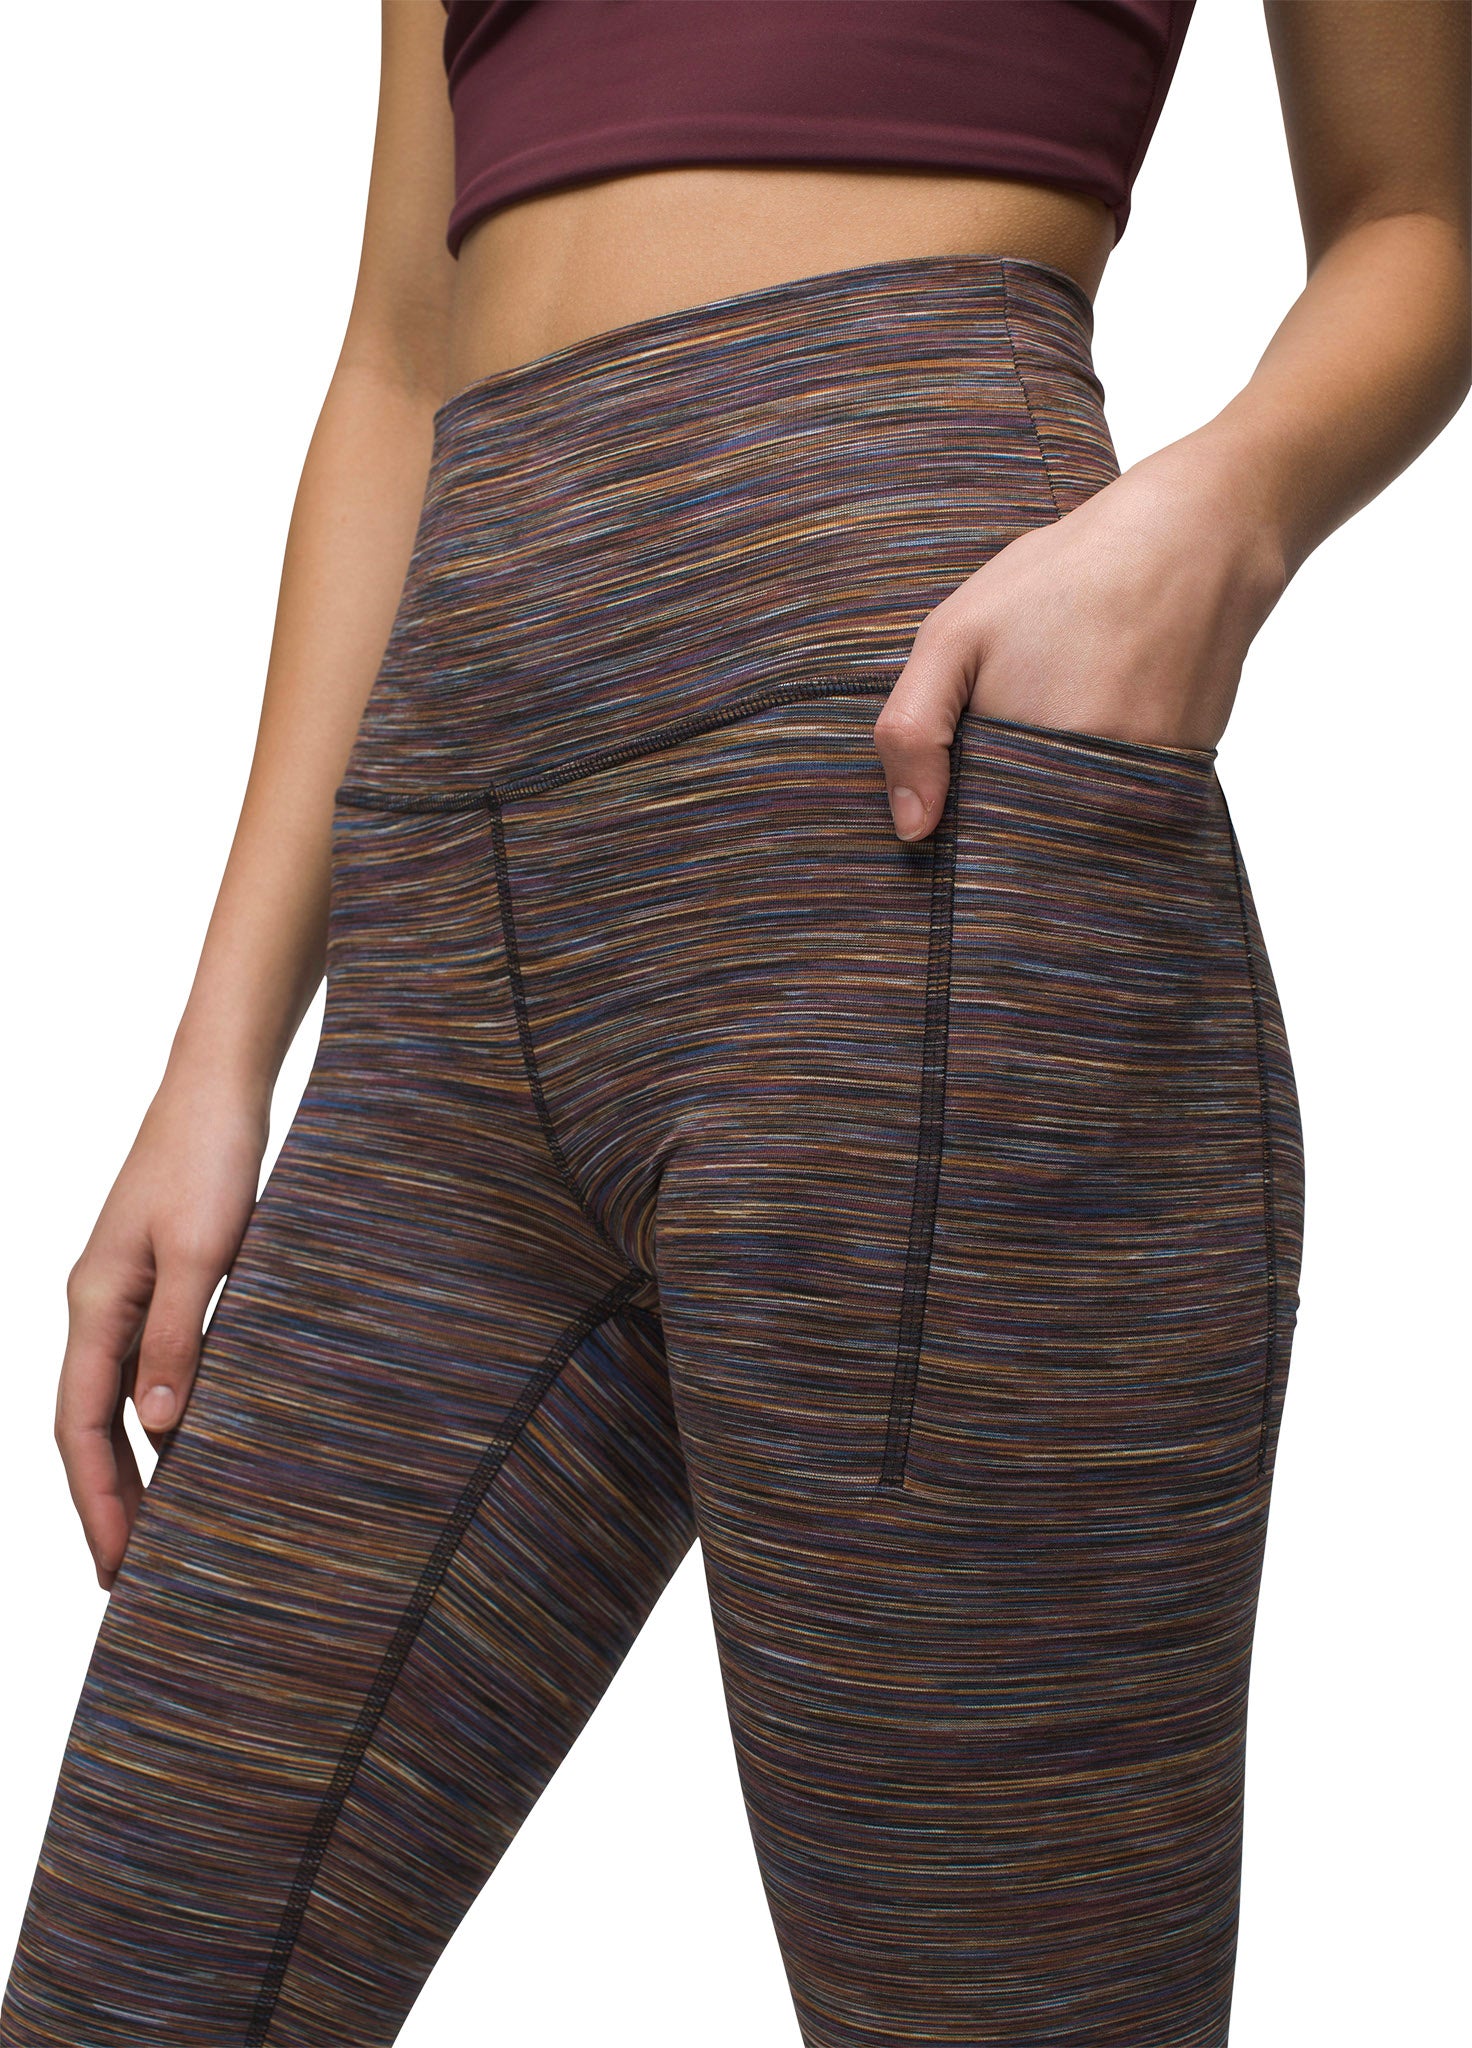 Spyder Women's Large Space Dye Full Length Leggings W/ Side Pockets